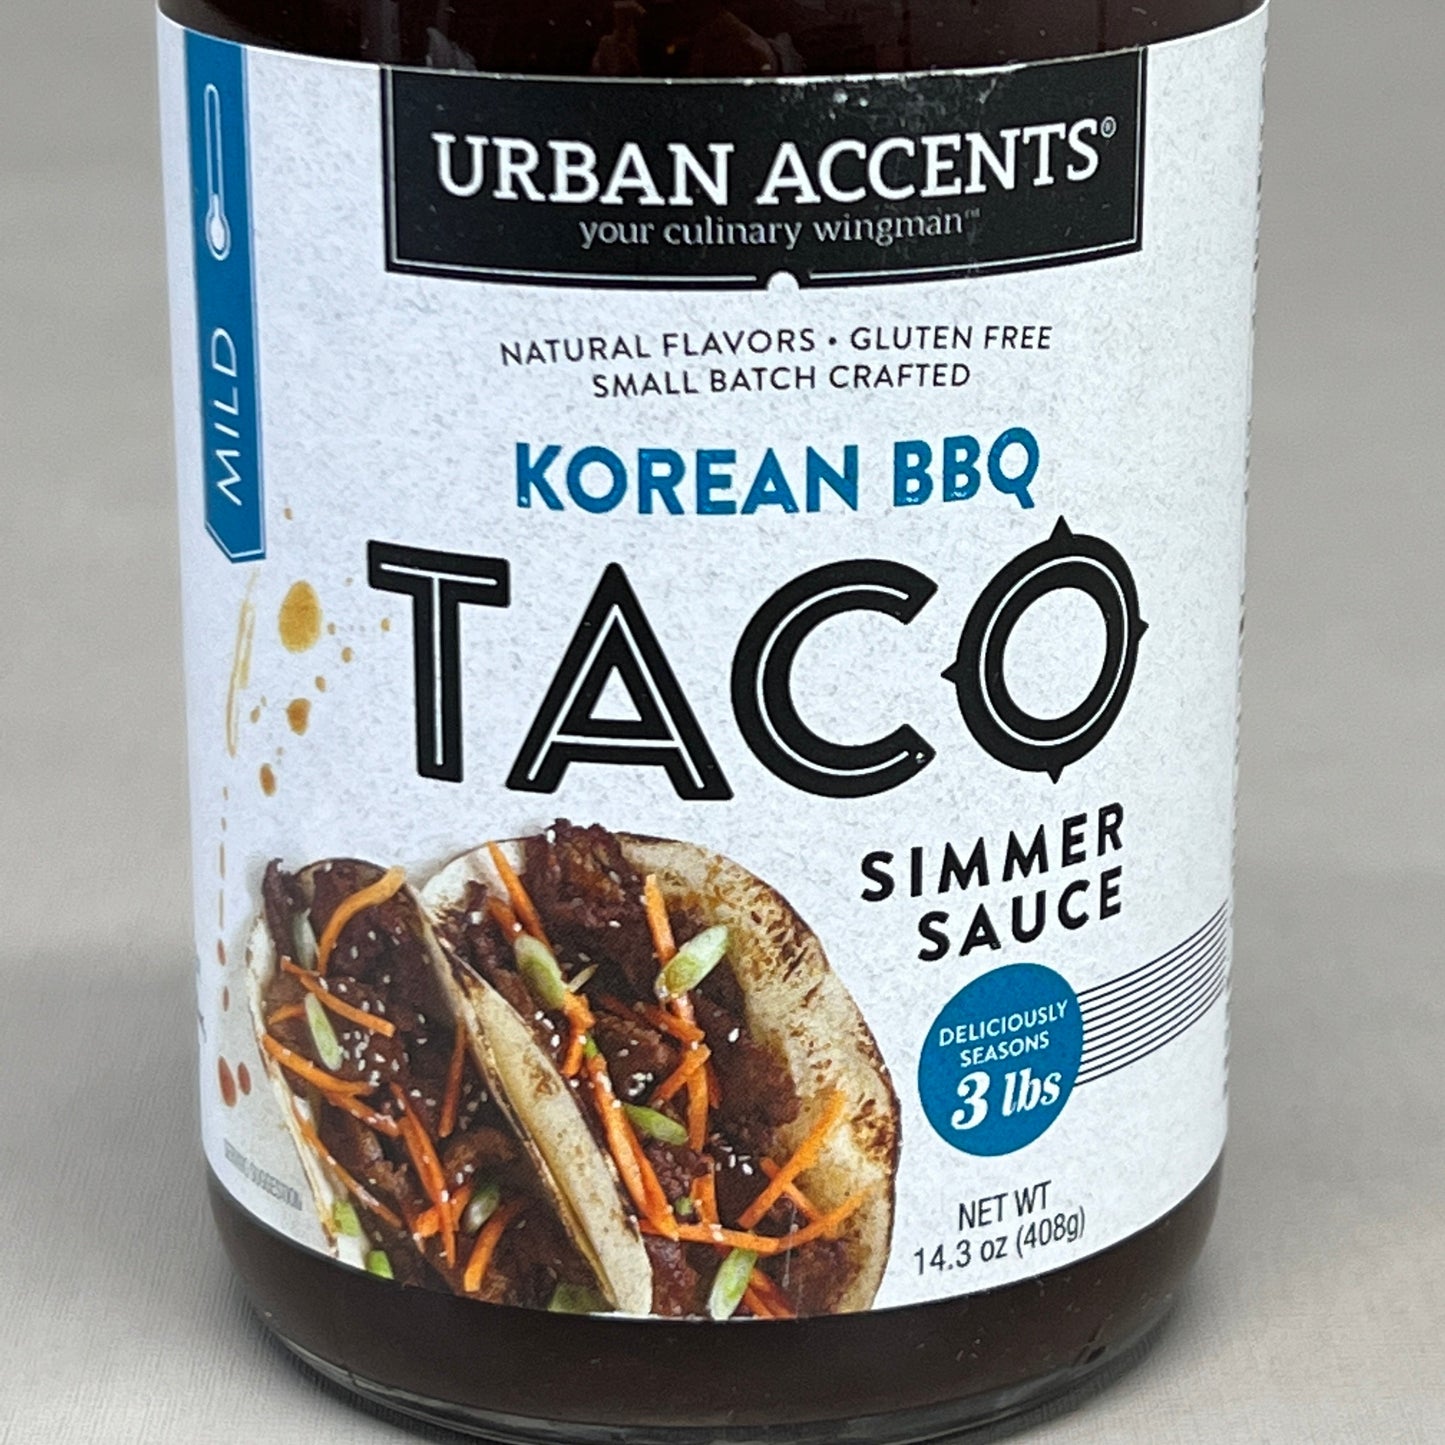 URBAN ACCENTS 4-PACK Mild Korean Barbecue Taco Simmer Sauce 14.3 oz GF 02/24 QURA4E31 (New)